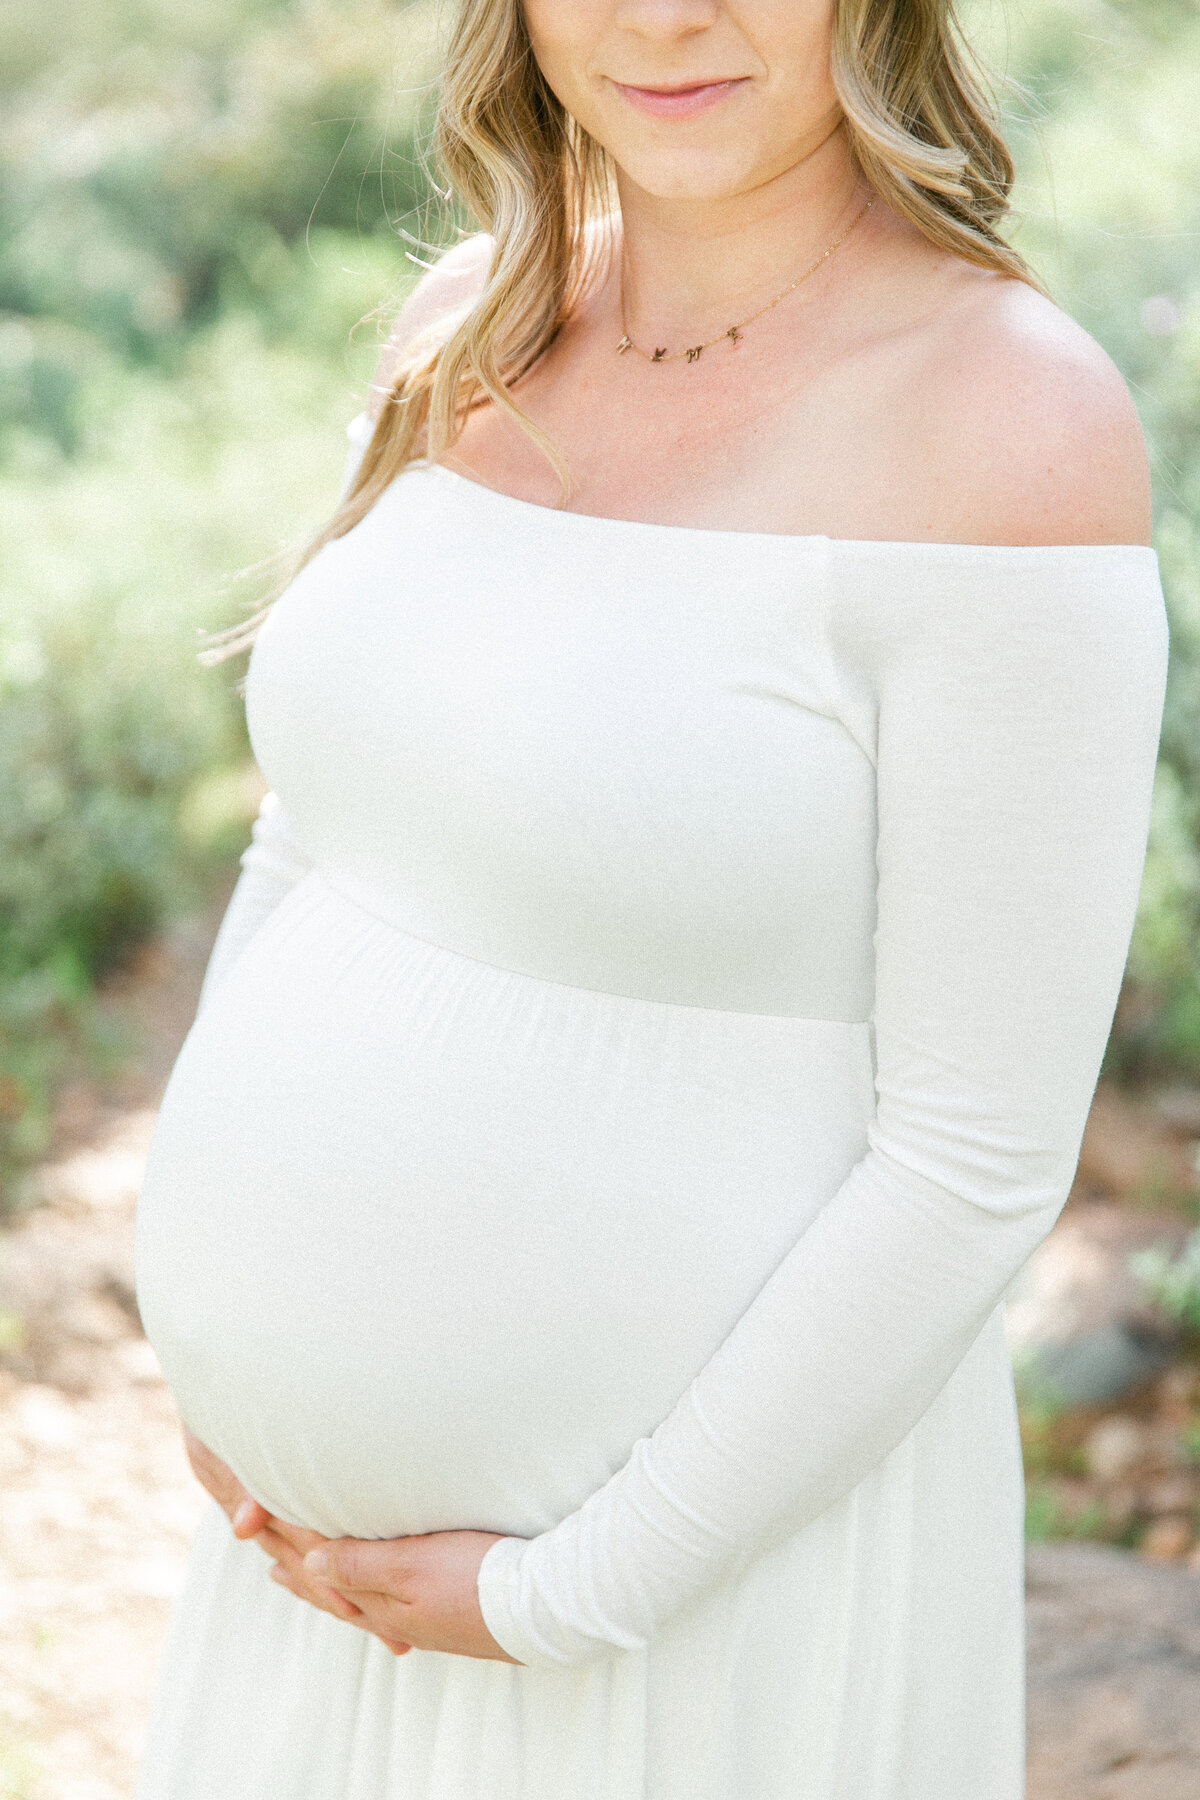 Karlie Colleen Photography - Scottsdale Arizona Maternity Photographer - Kylie & Troy-58